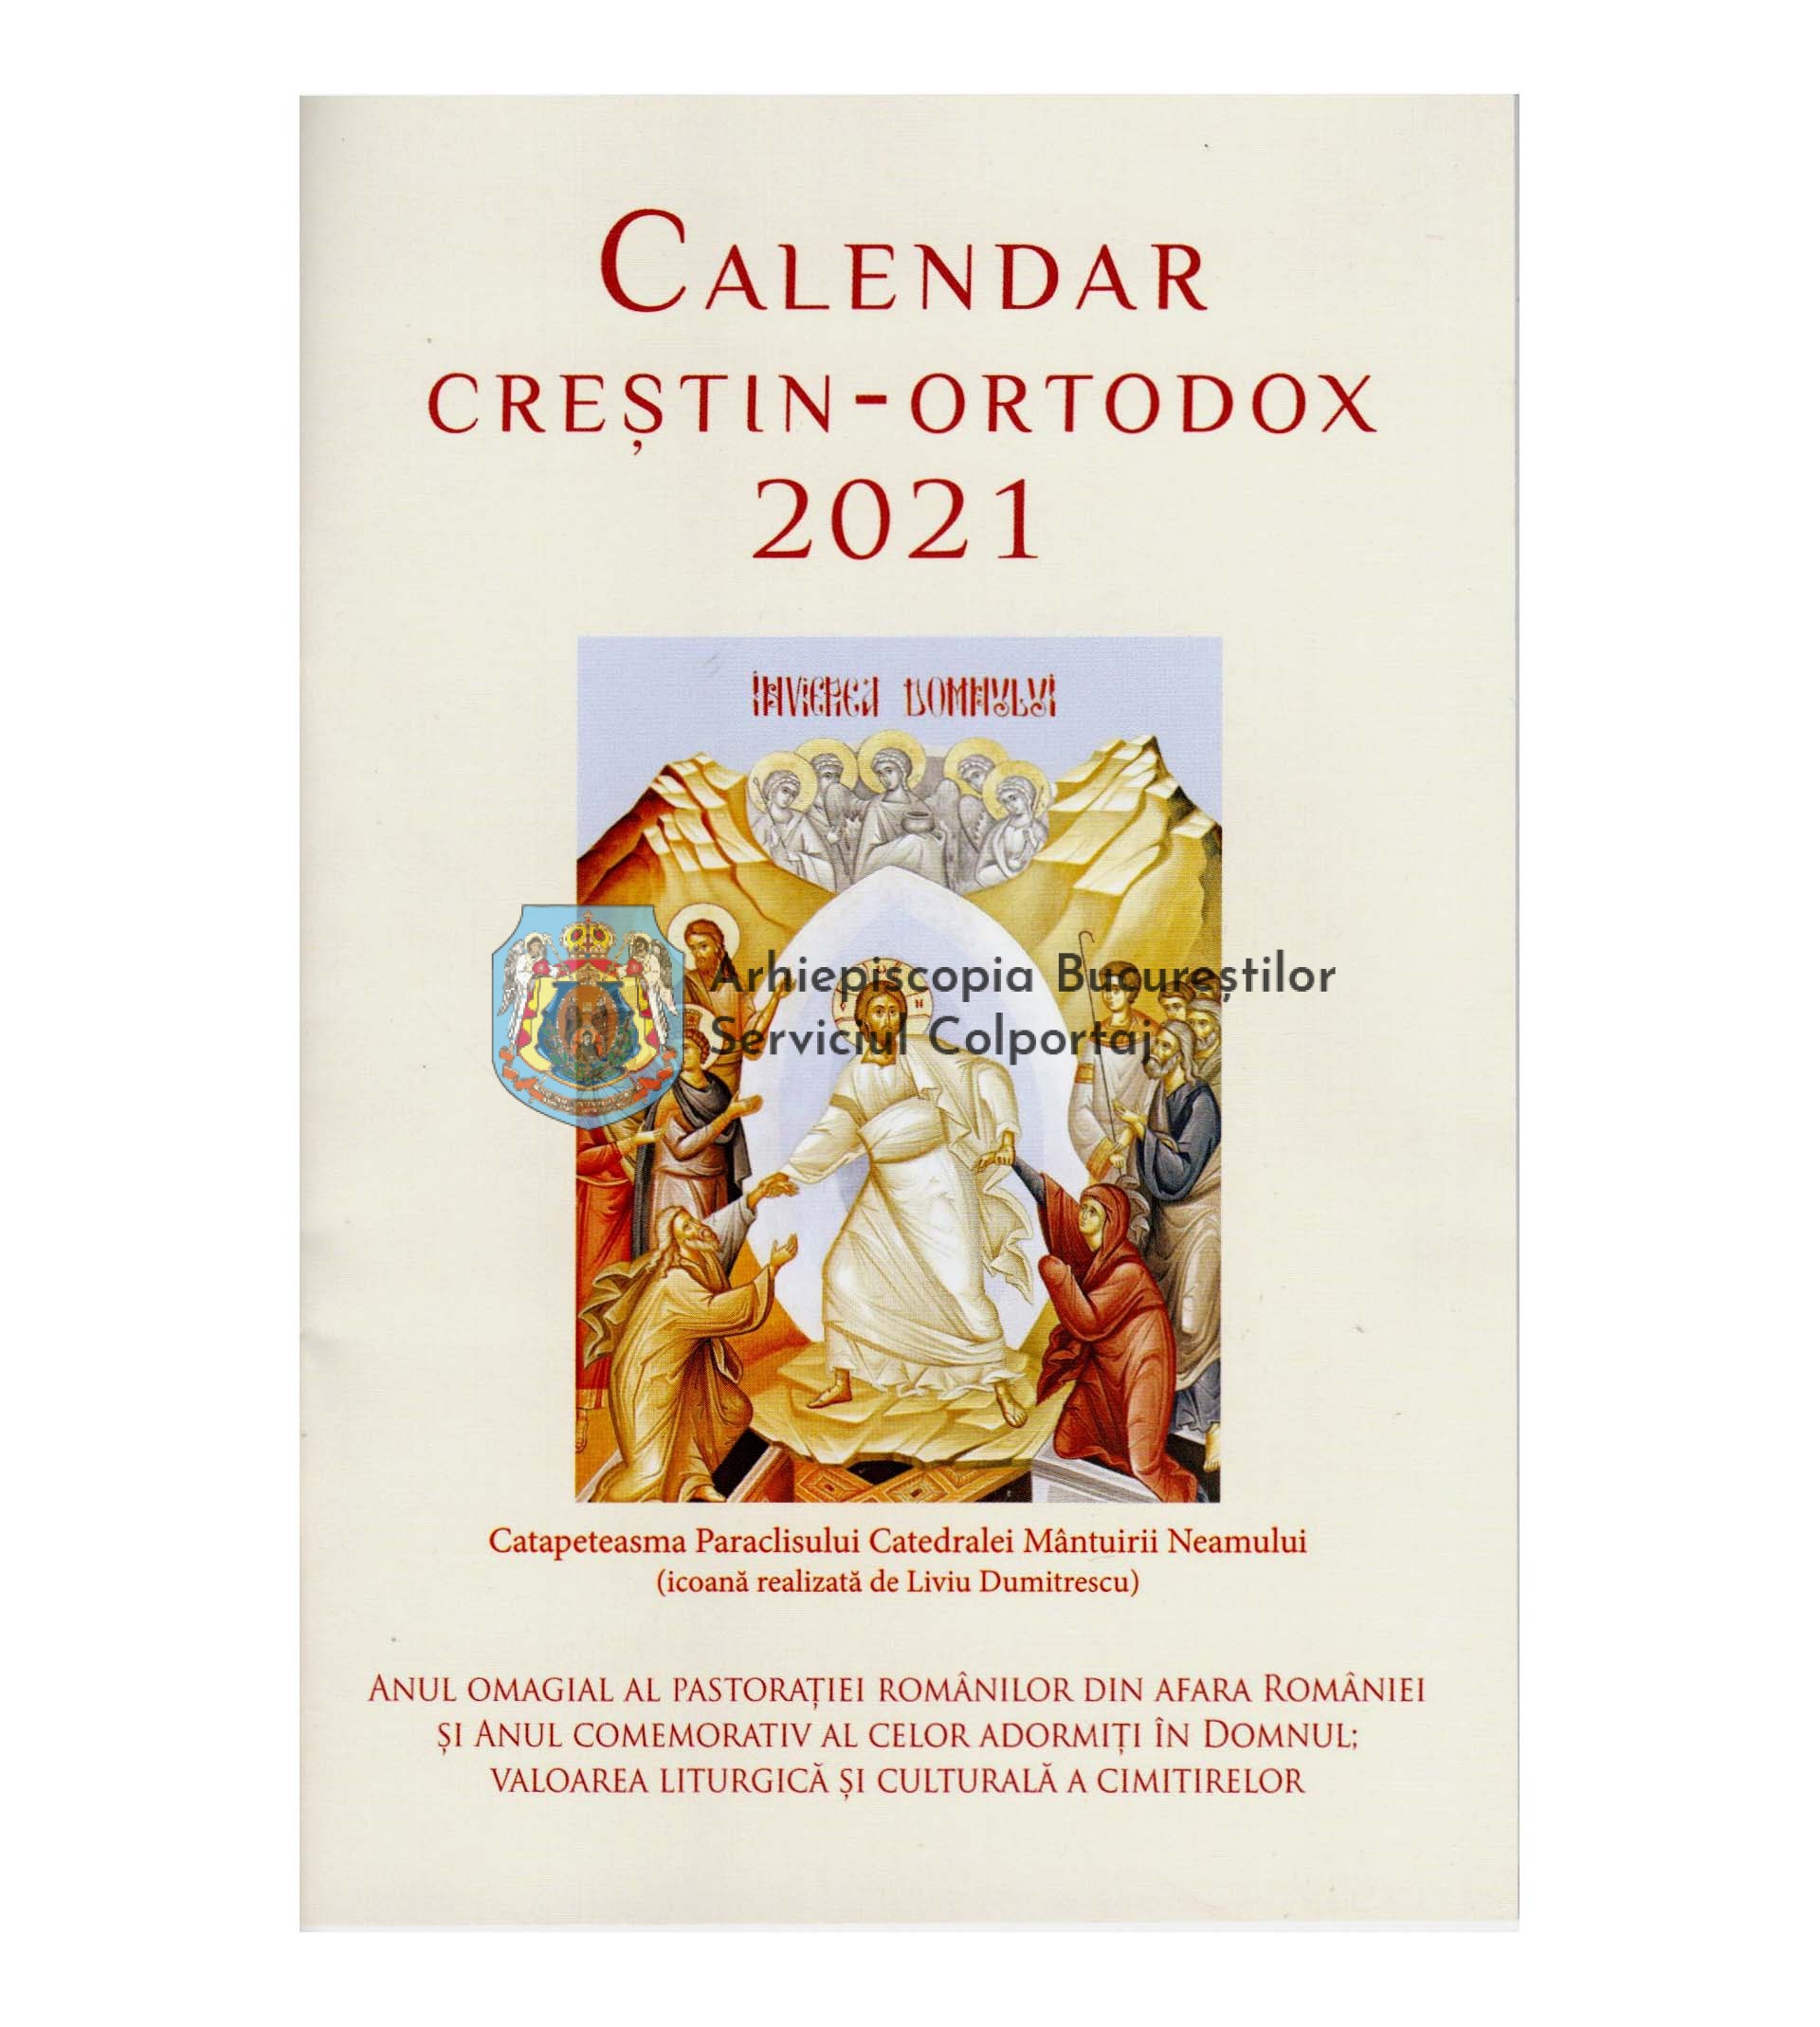 Calendar Crestin Ortodox 2021 | February 2021